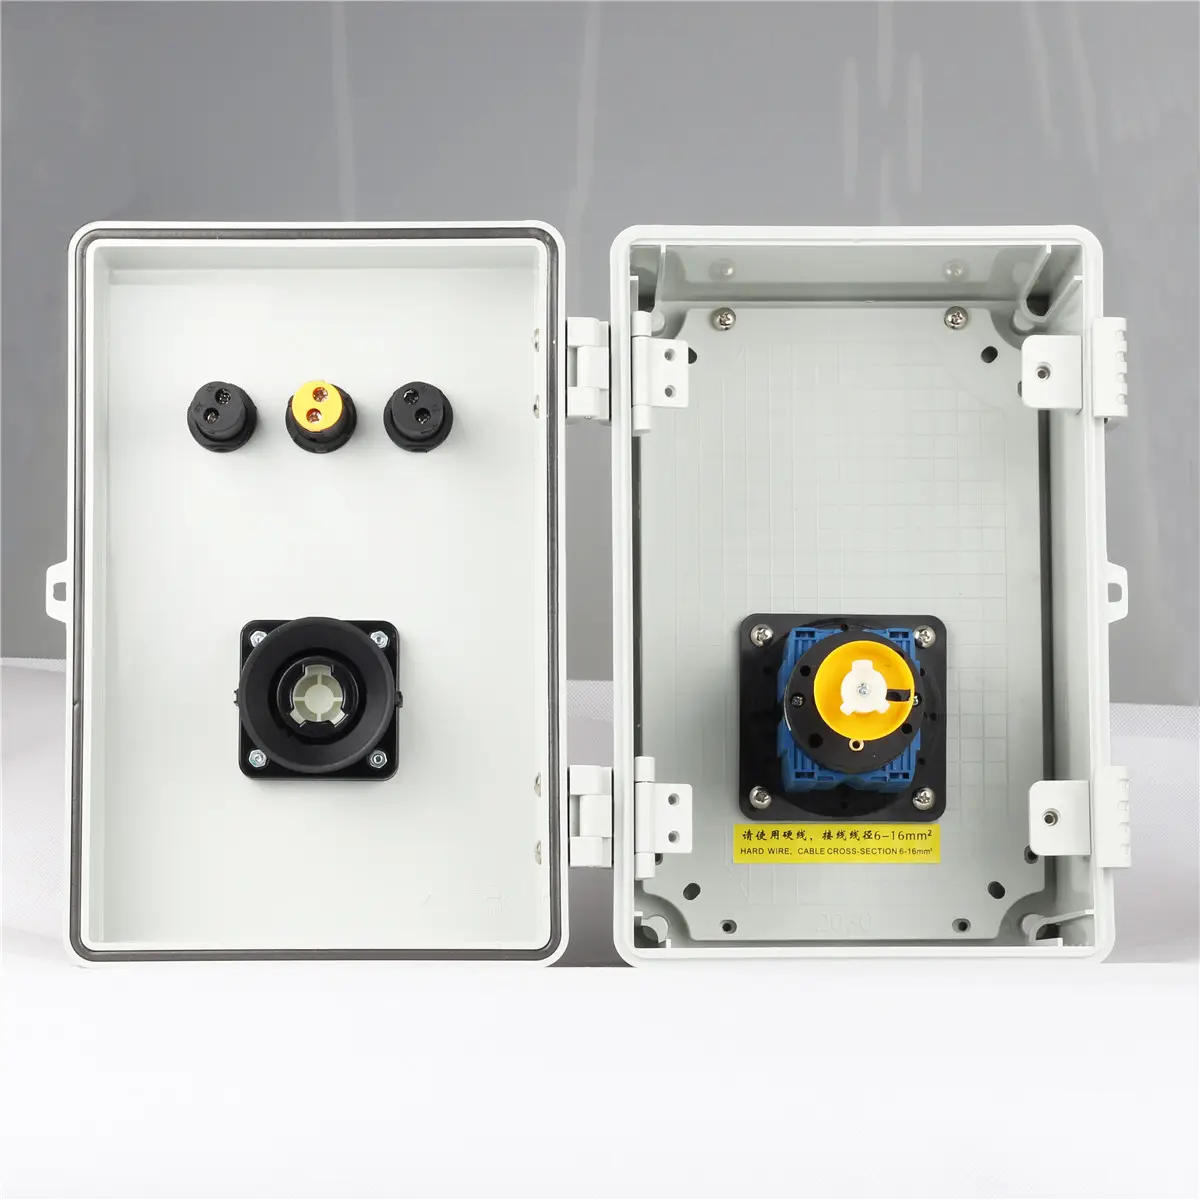 Cansen Power Changeover Electrical gehäuse 3 phase schalter mit Indicator lampe, GEN-OFF-MAIN, Auto Off Manual